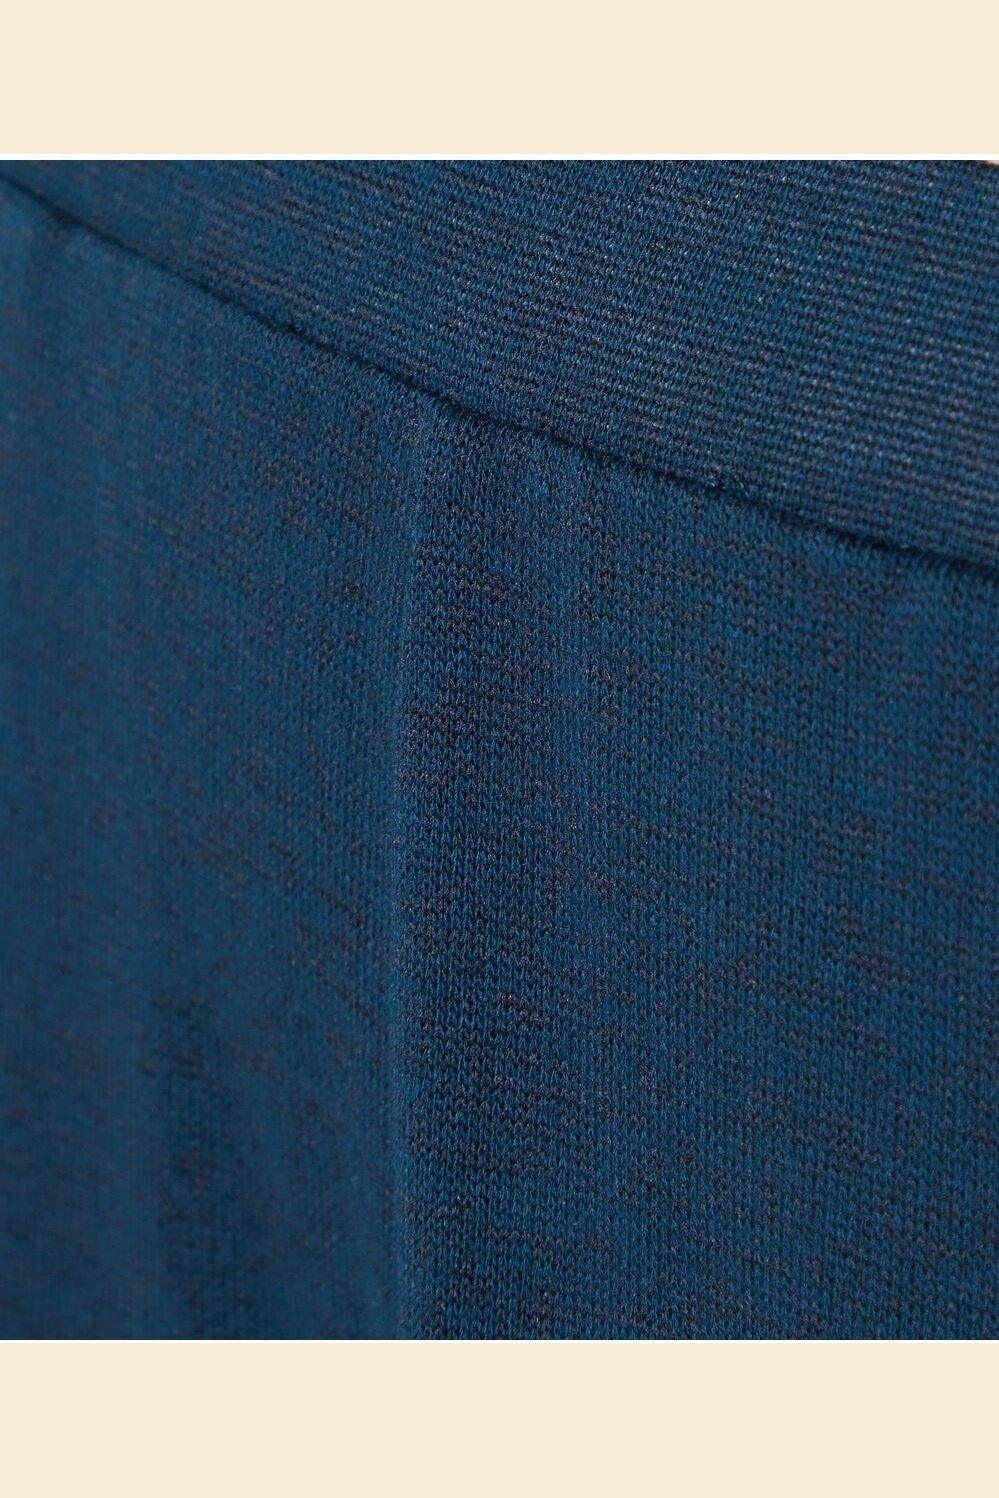 ETAM - מכנסי פיג'מה ארוכים EARLY כחול - MASHBIR//365